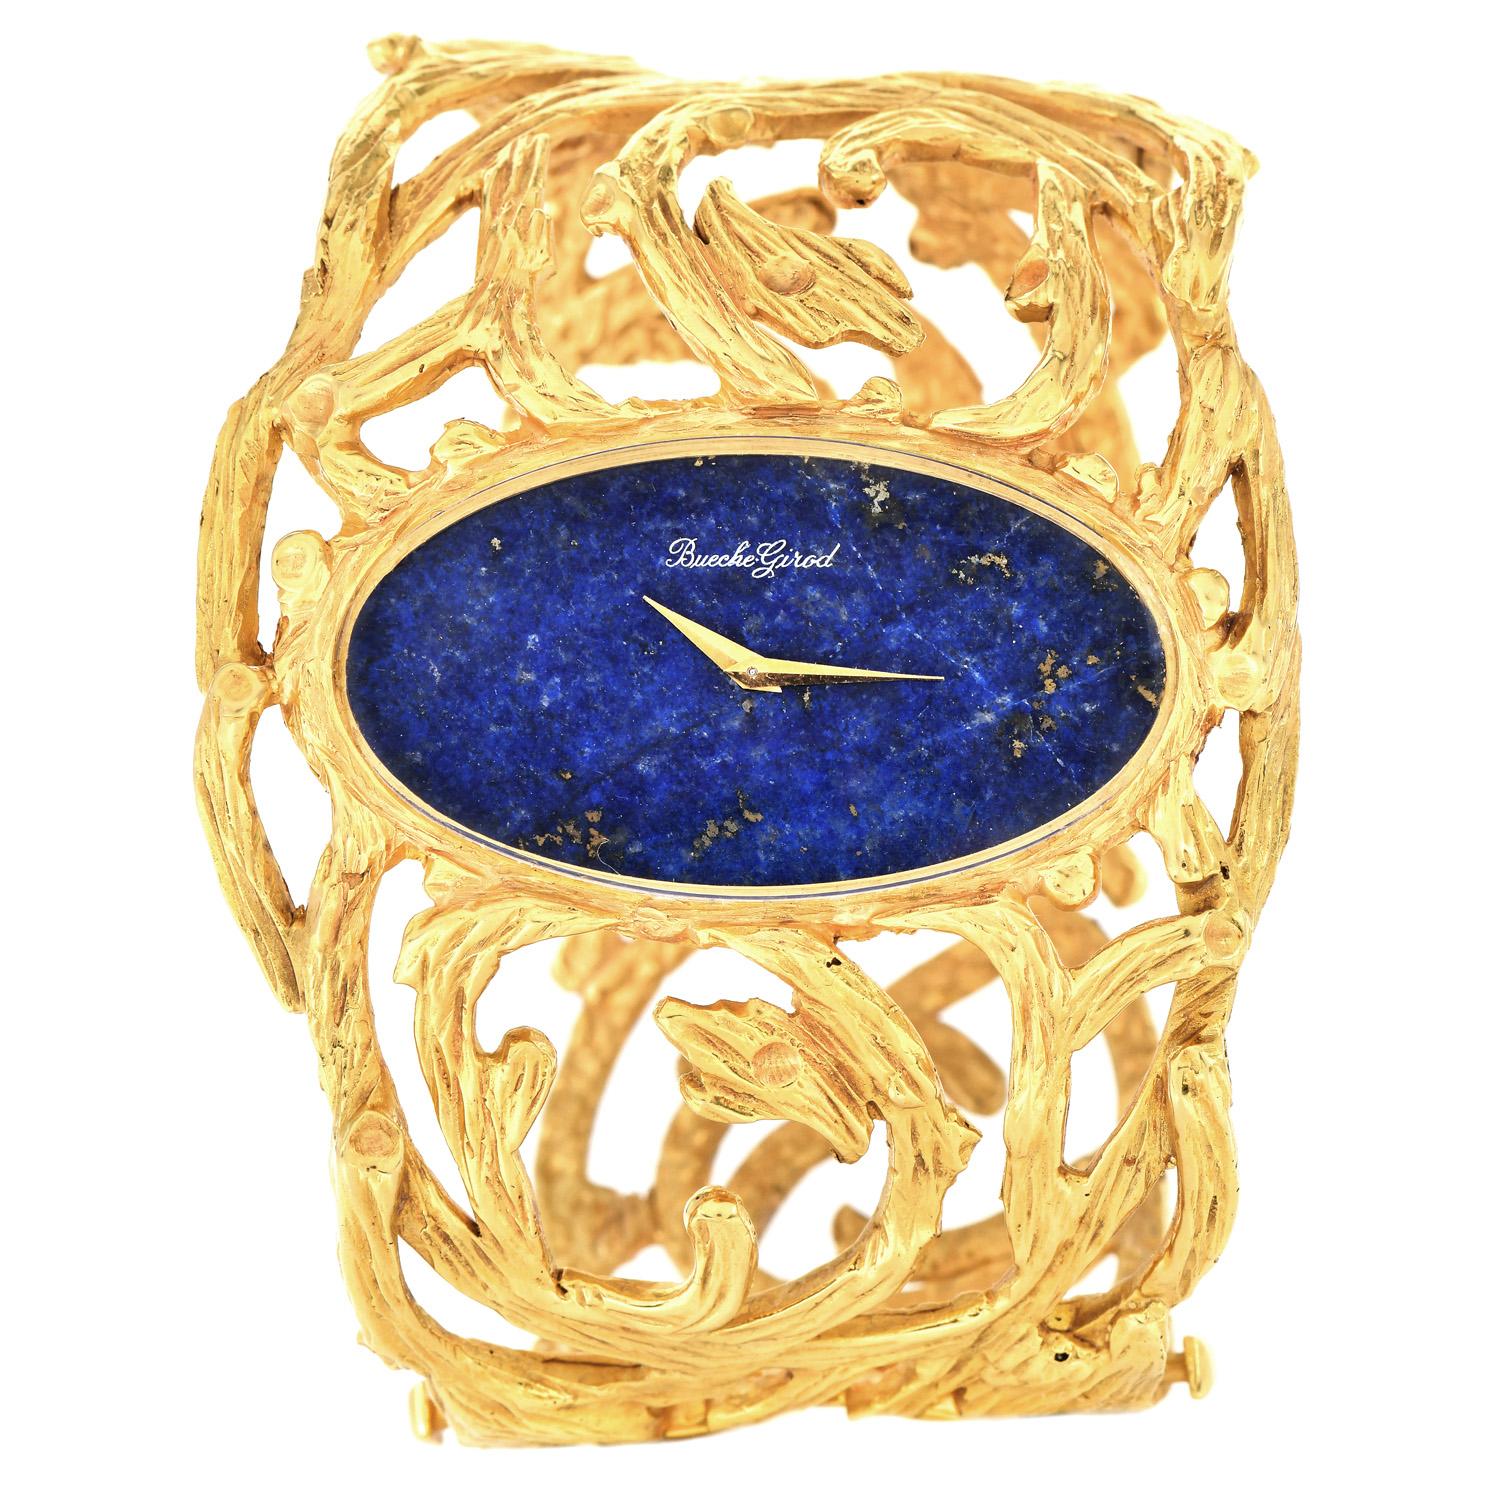 Oval Cut Vintage Bueche Girod Lapis Lazuli 18K Yellow Gold Wide Bangle Bracelet Watch  